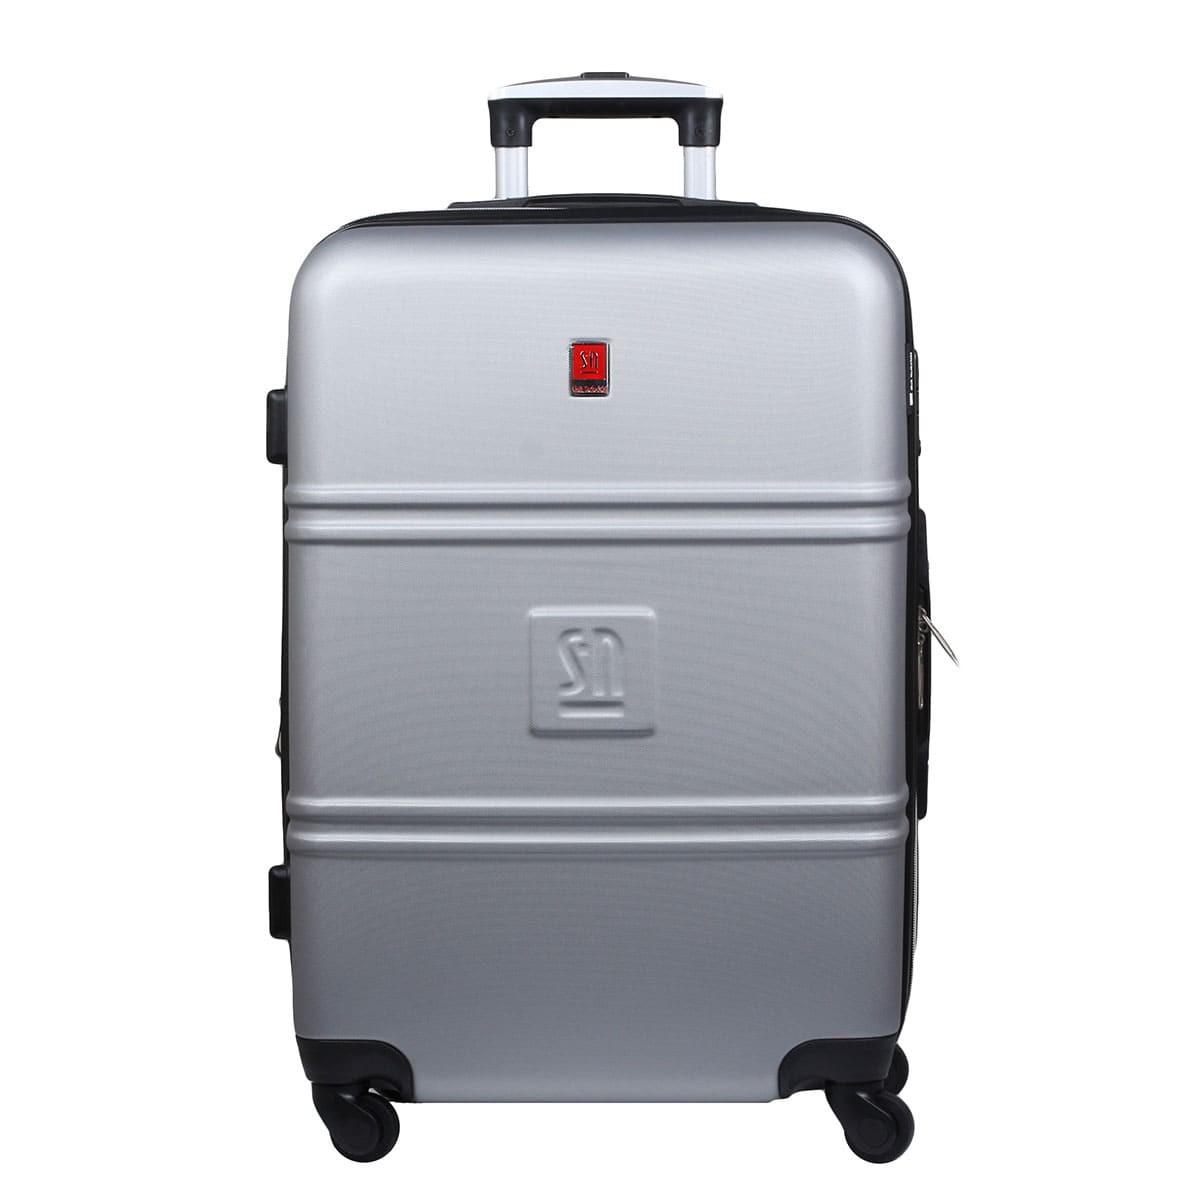 srebrna-walizka-podrozna-srednia-na-kolkach-Art-Class-04-0411O-11.jpg